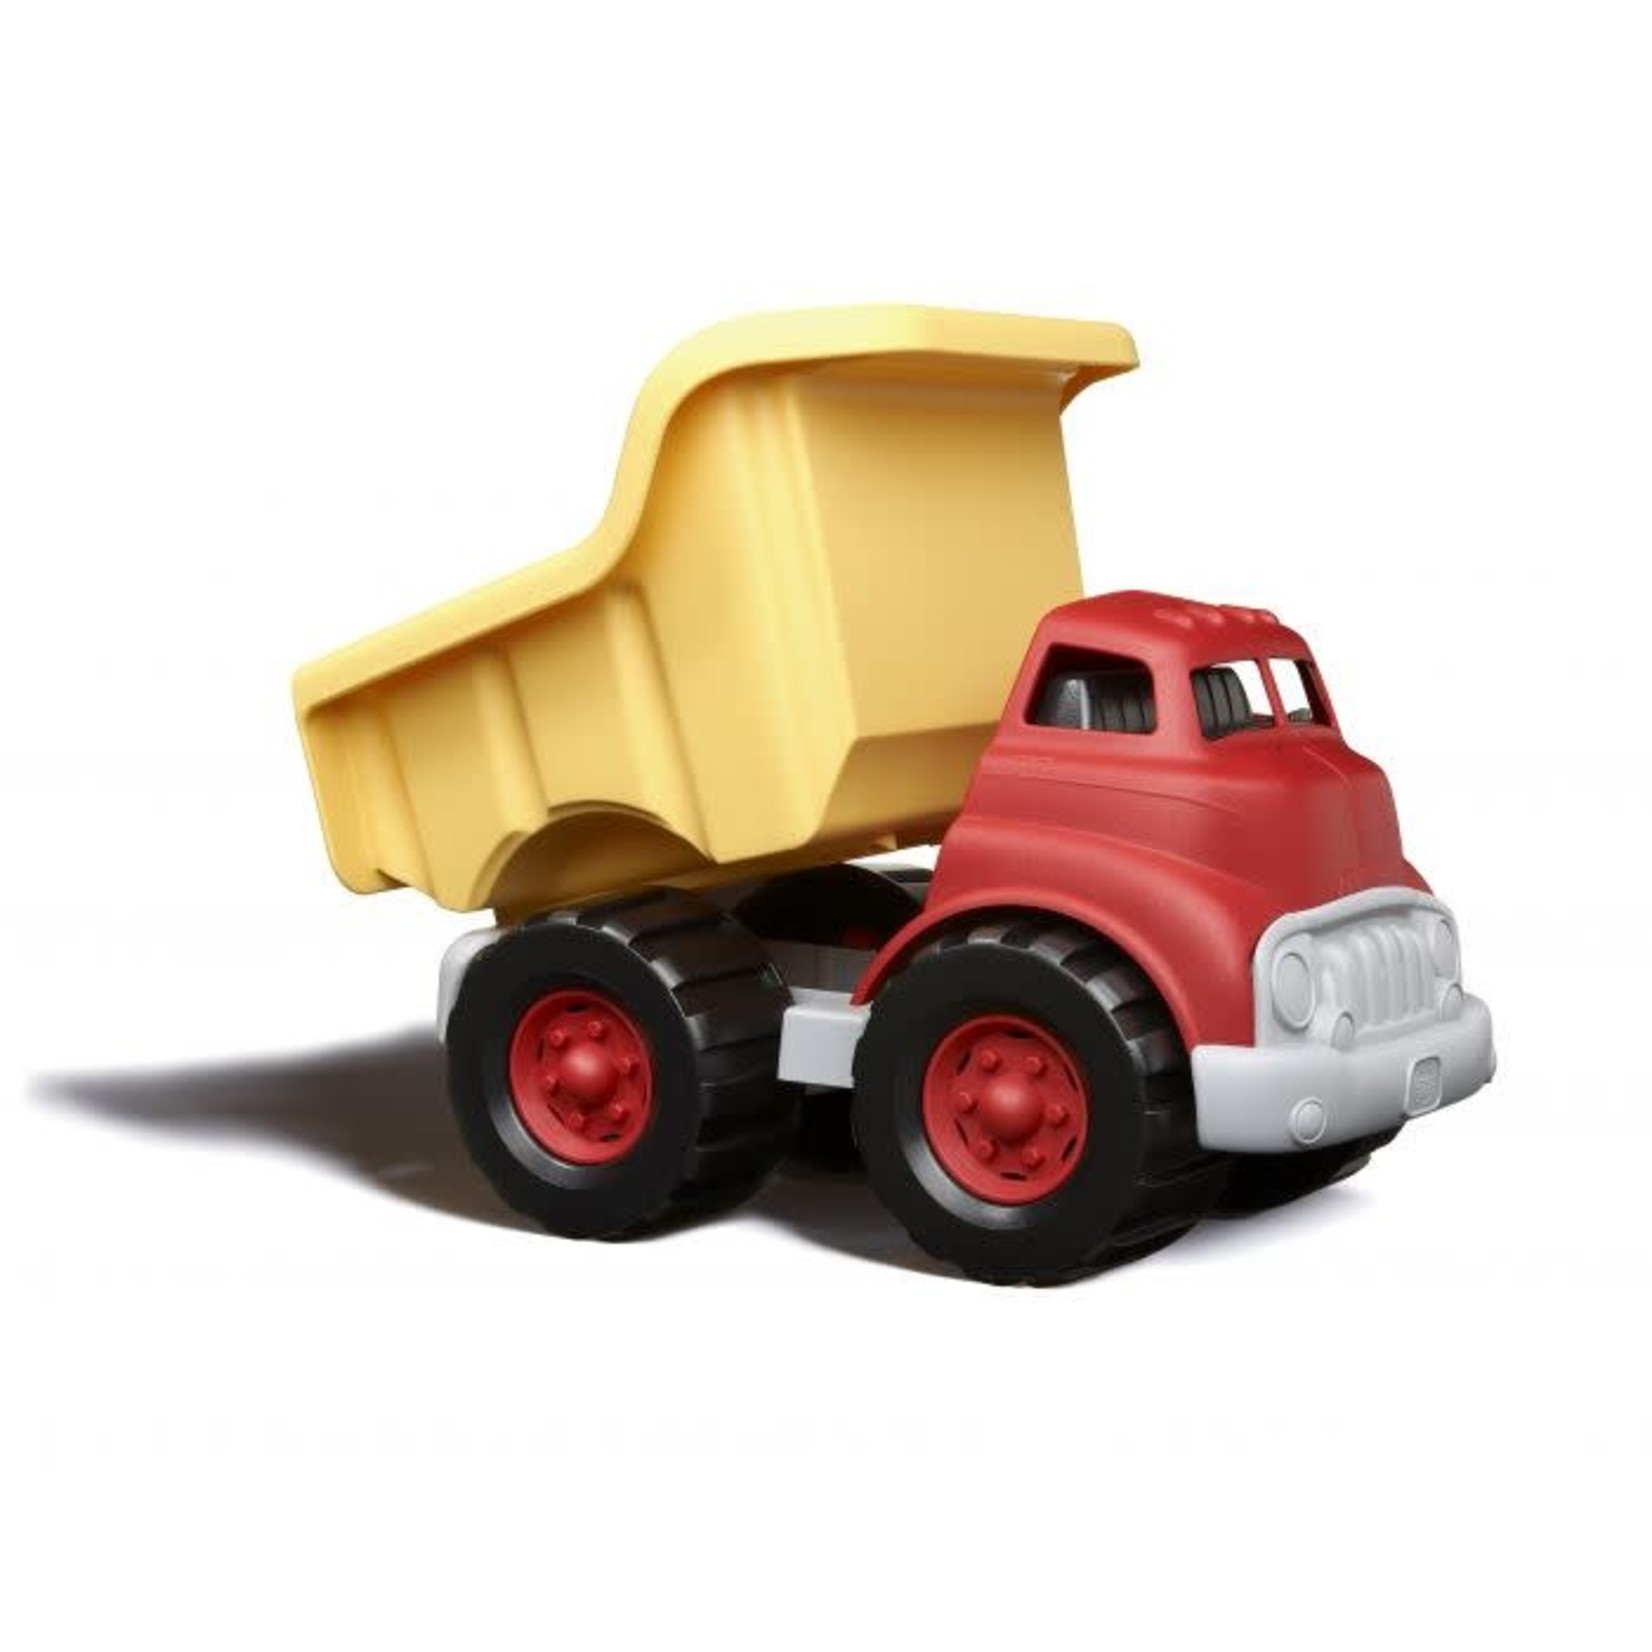 Dump Truck (Red/Yellow) 1+